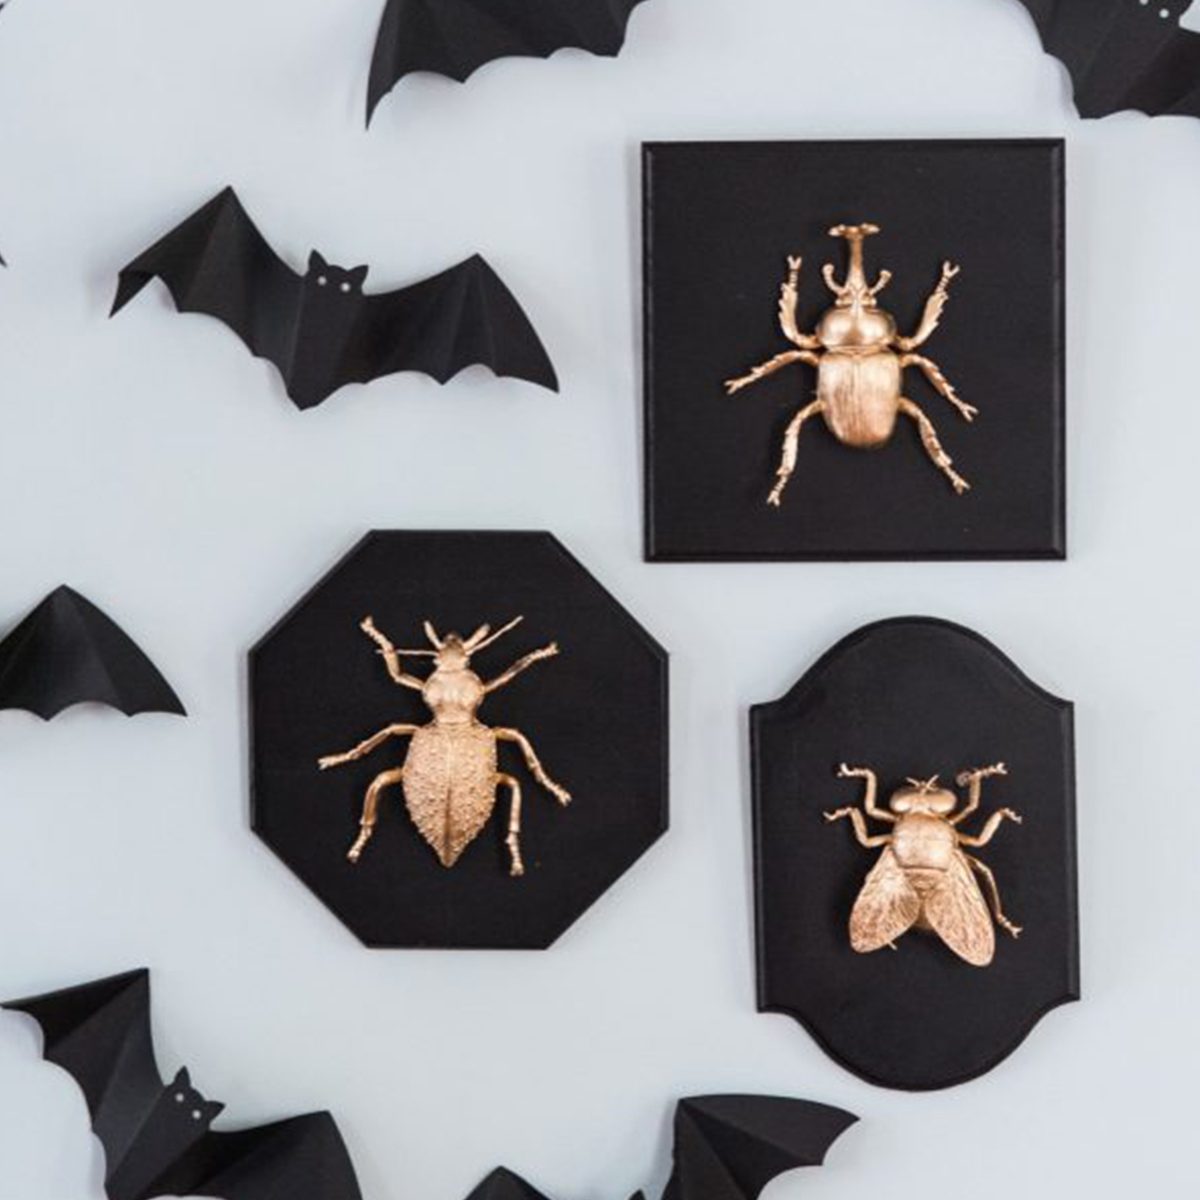 Sliner 3 Pcs Halloween Bat Paper Towel Holder Gothic Paper Towel Holder  with Coffin Base Gothic Home Decor for Spooky Rustic Halloween Bat Decor  for